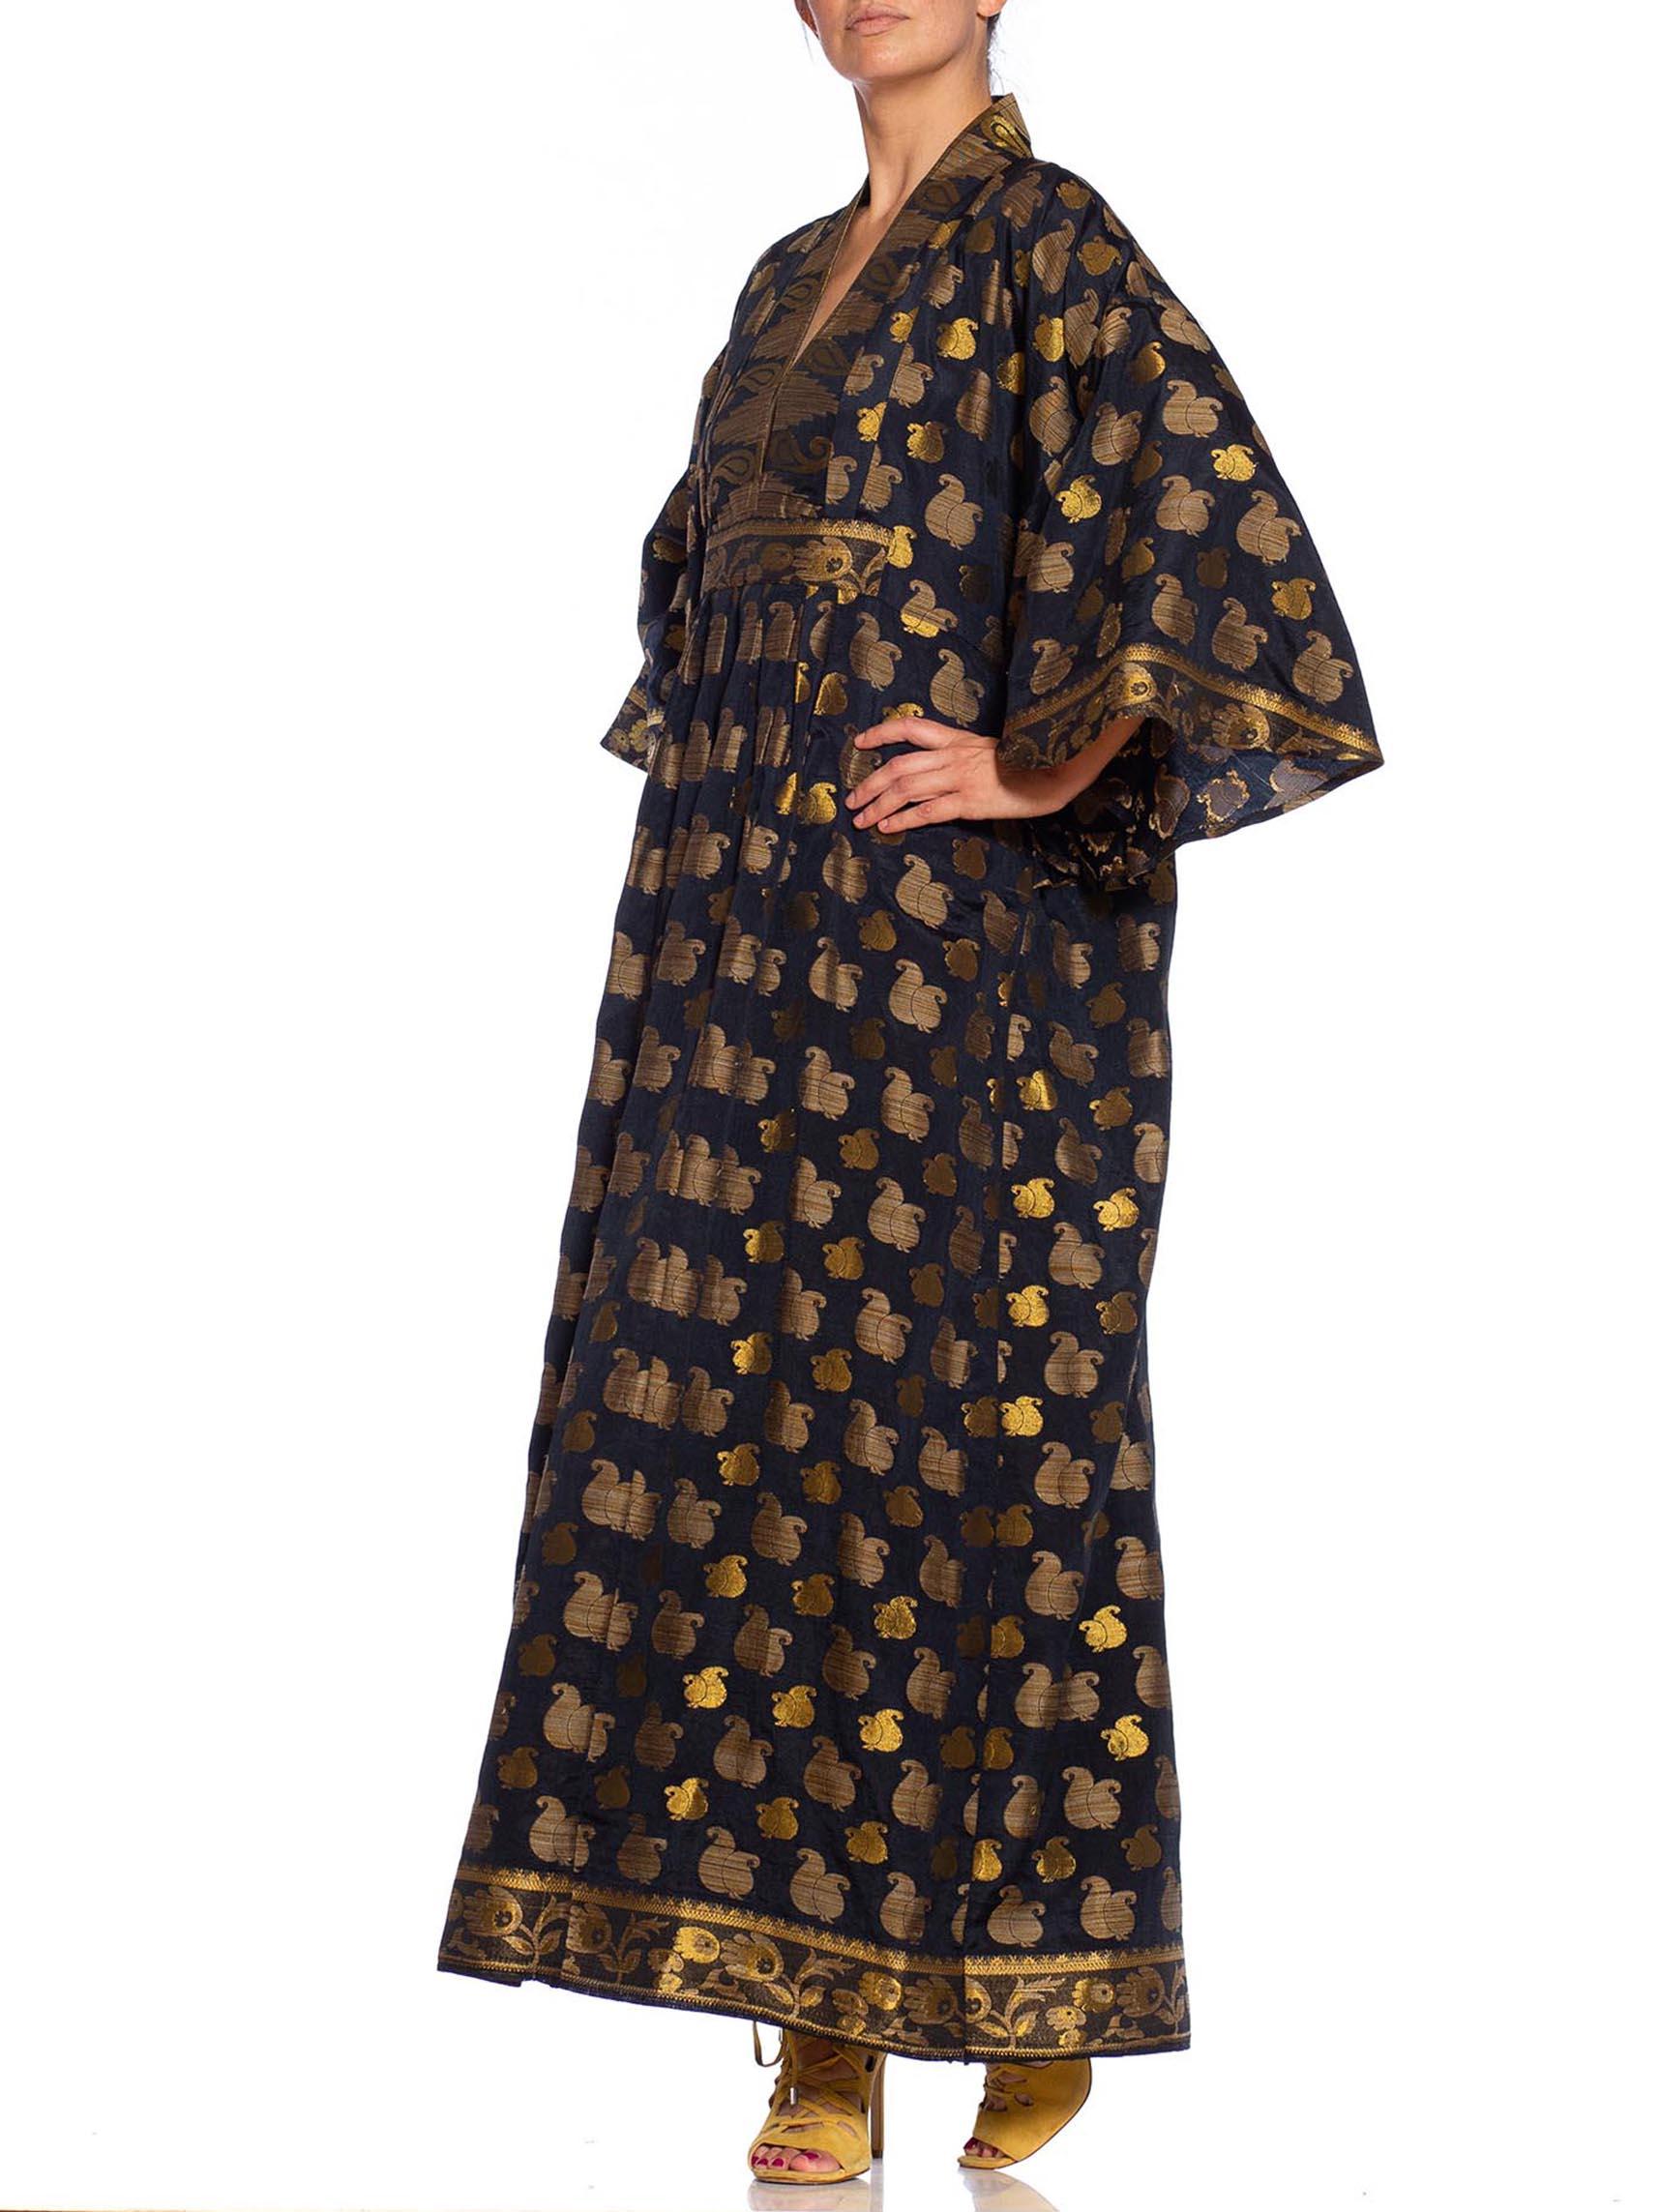 MORPHEW COLLECTION Black & Gold Metallic Silk Kaftan Made From Vintage Saris For Sale 1